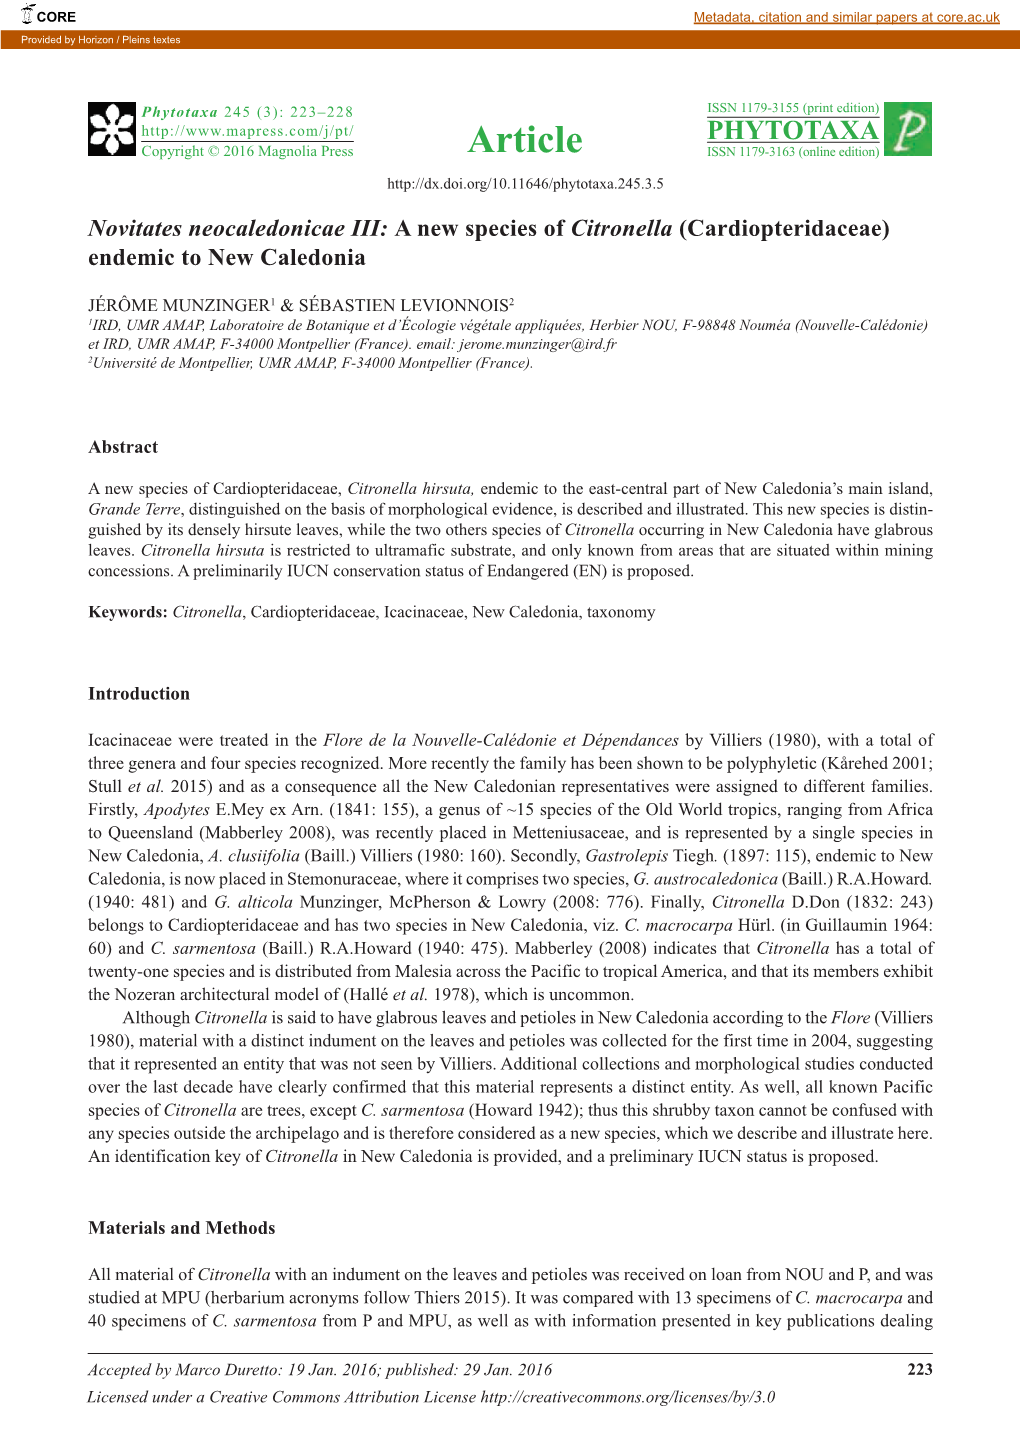 Novitates Neocaledonicae III : a New Species of Citronella